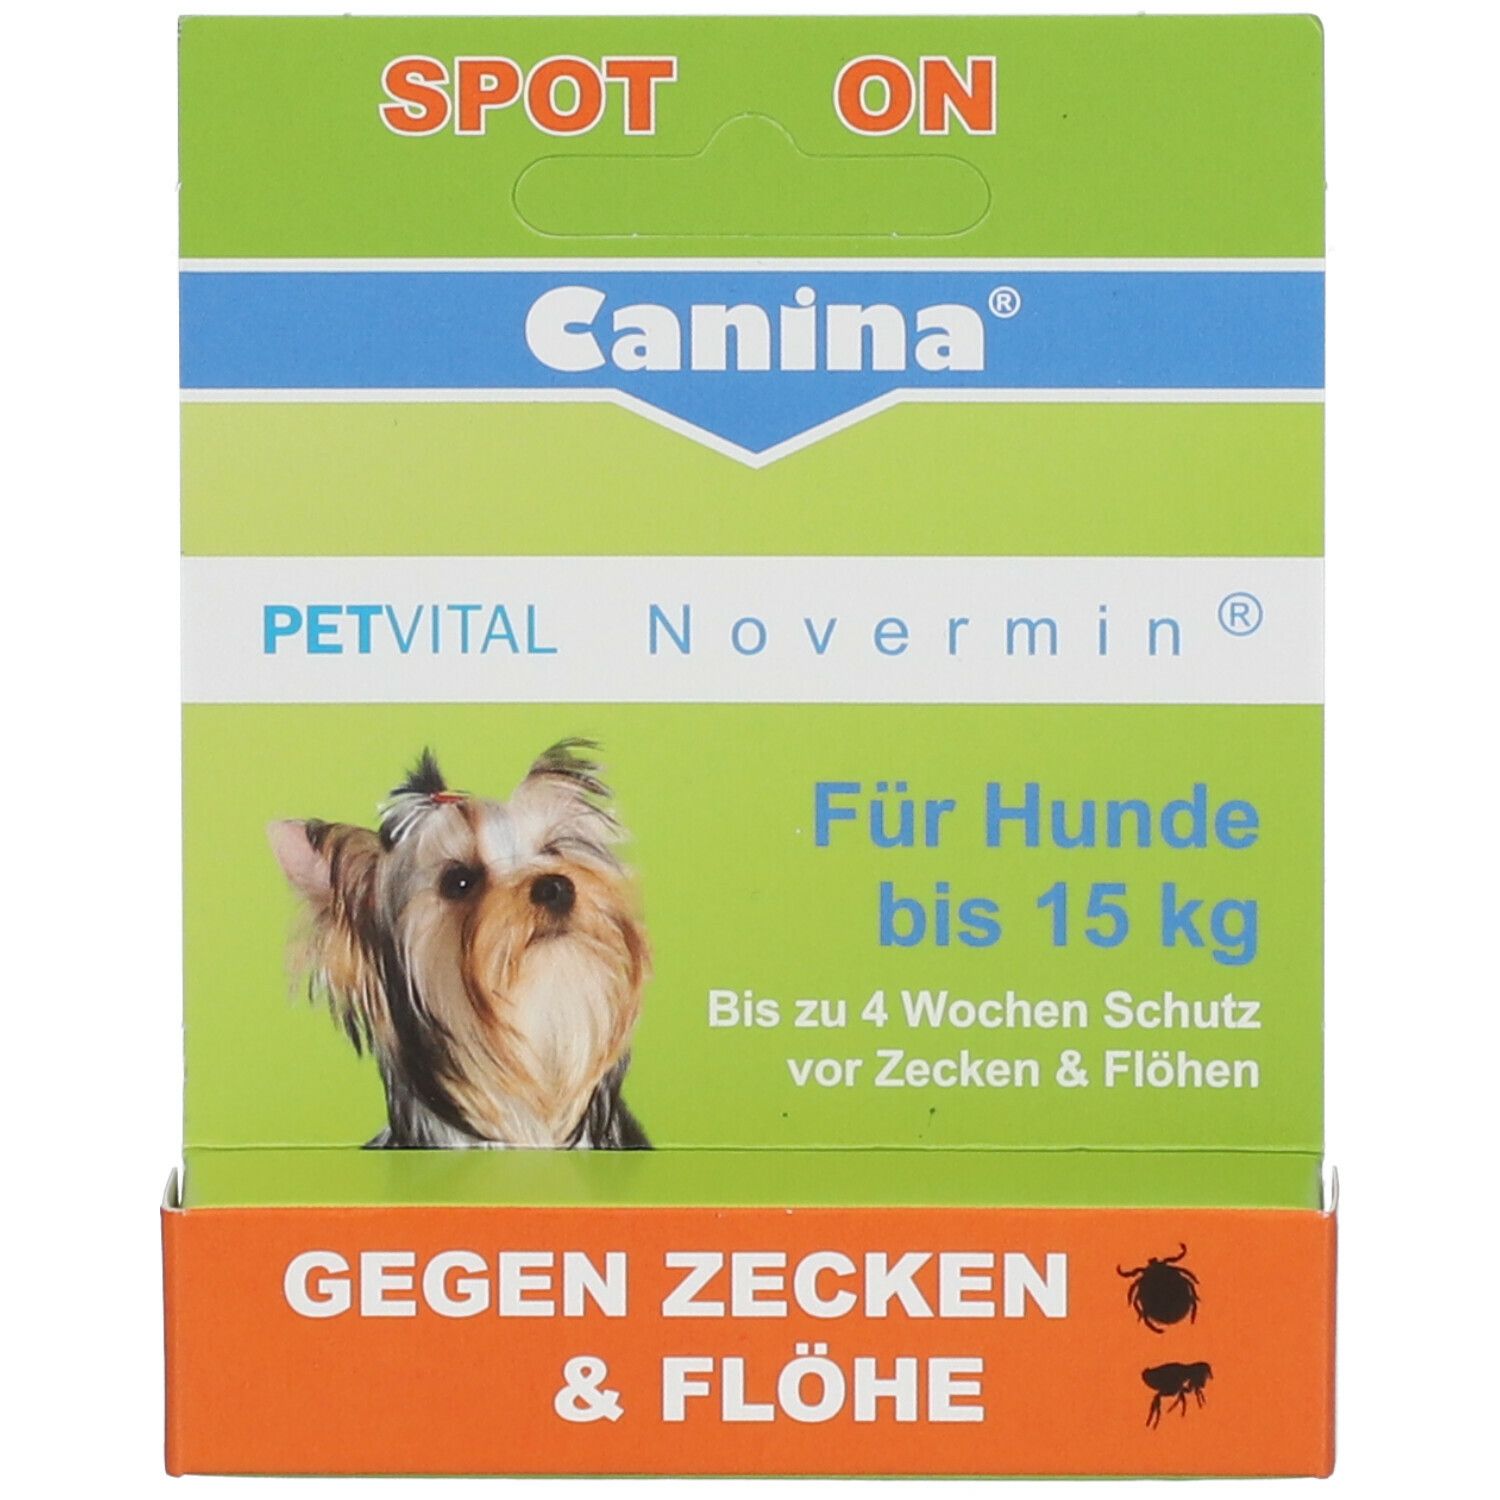 Canina® PETVITAL Novermin® für Hunde bis 15 kg